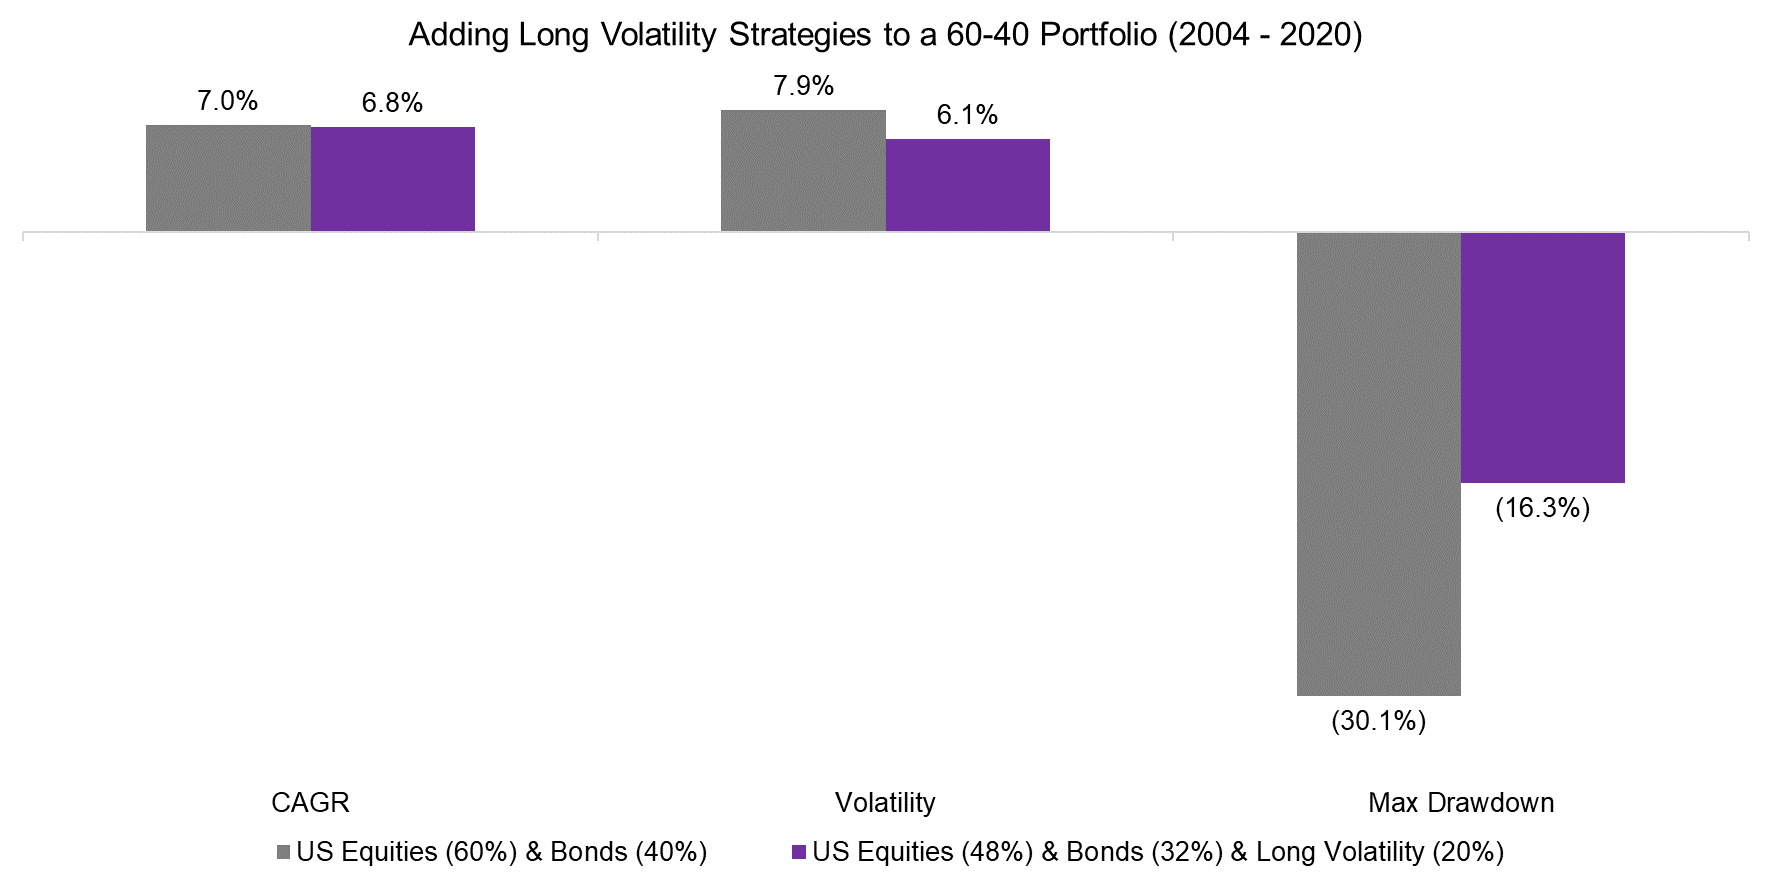 Adding Long Volatility Strategies to a 60-40 Portfolio